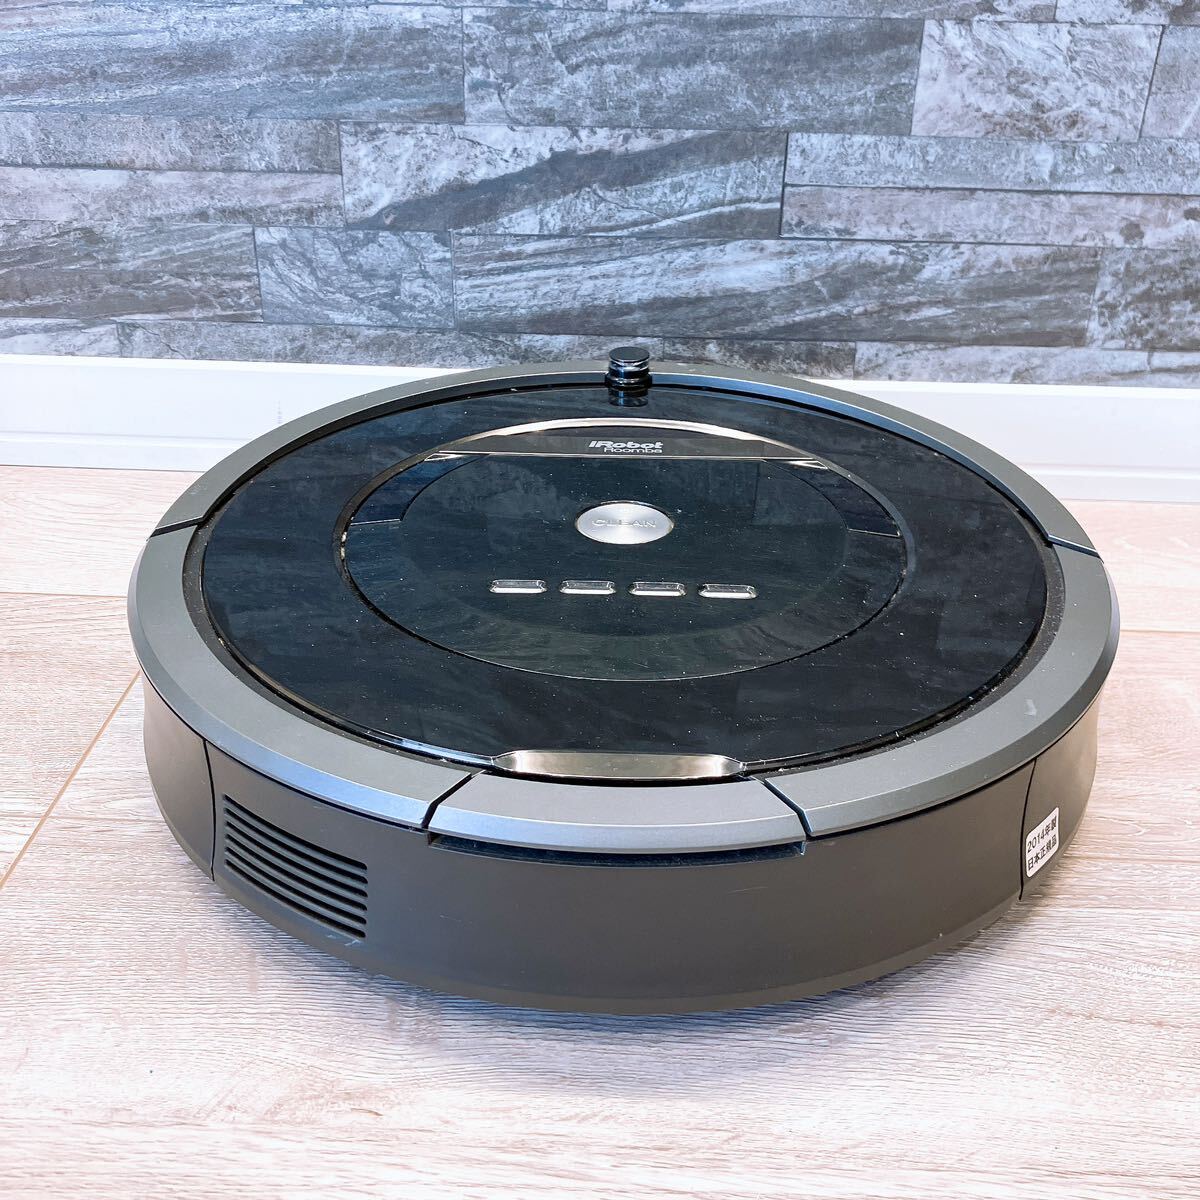 iRobot Roomba 880 robot vacuum cleaner I robot consumer electronics roomba 